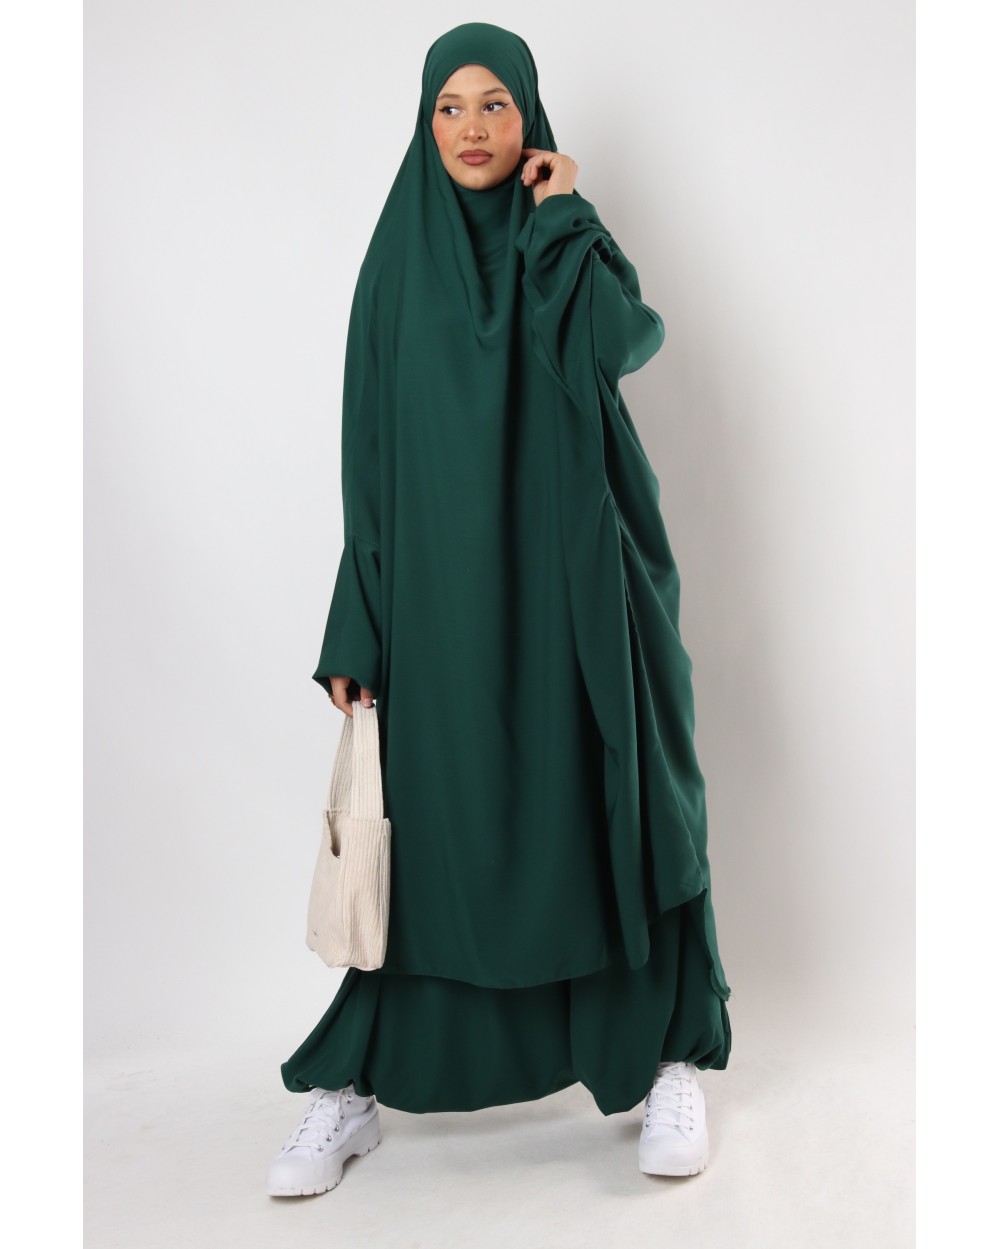 Nafissa jilbab and harem pants set